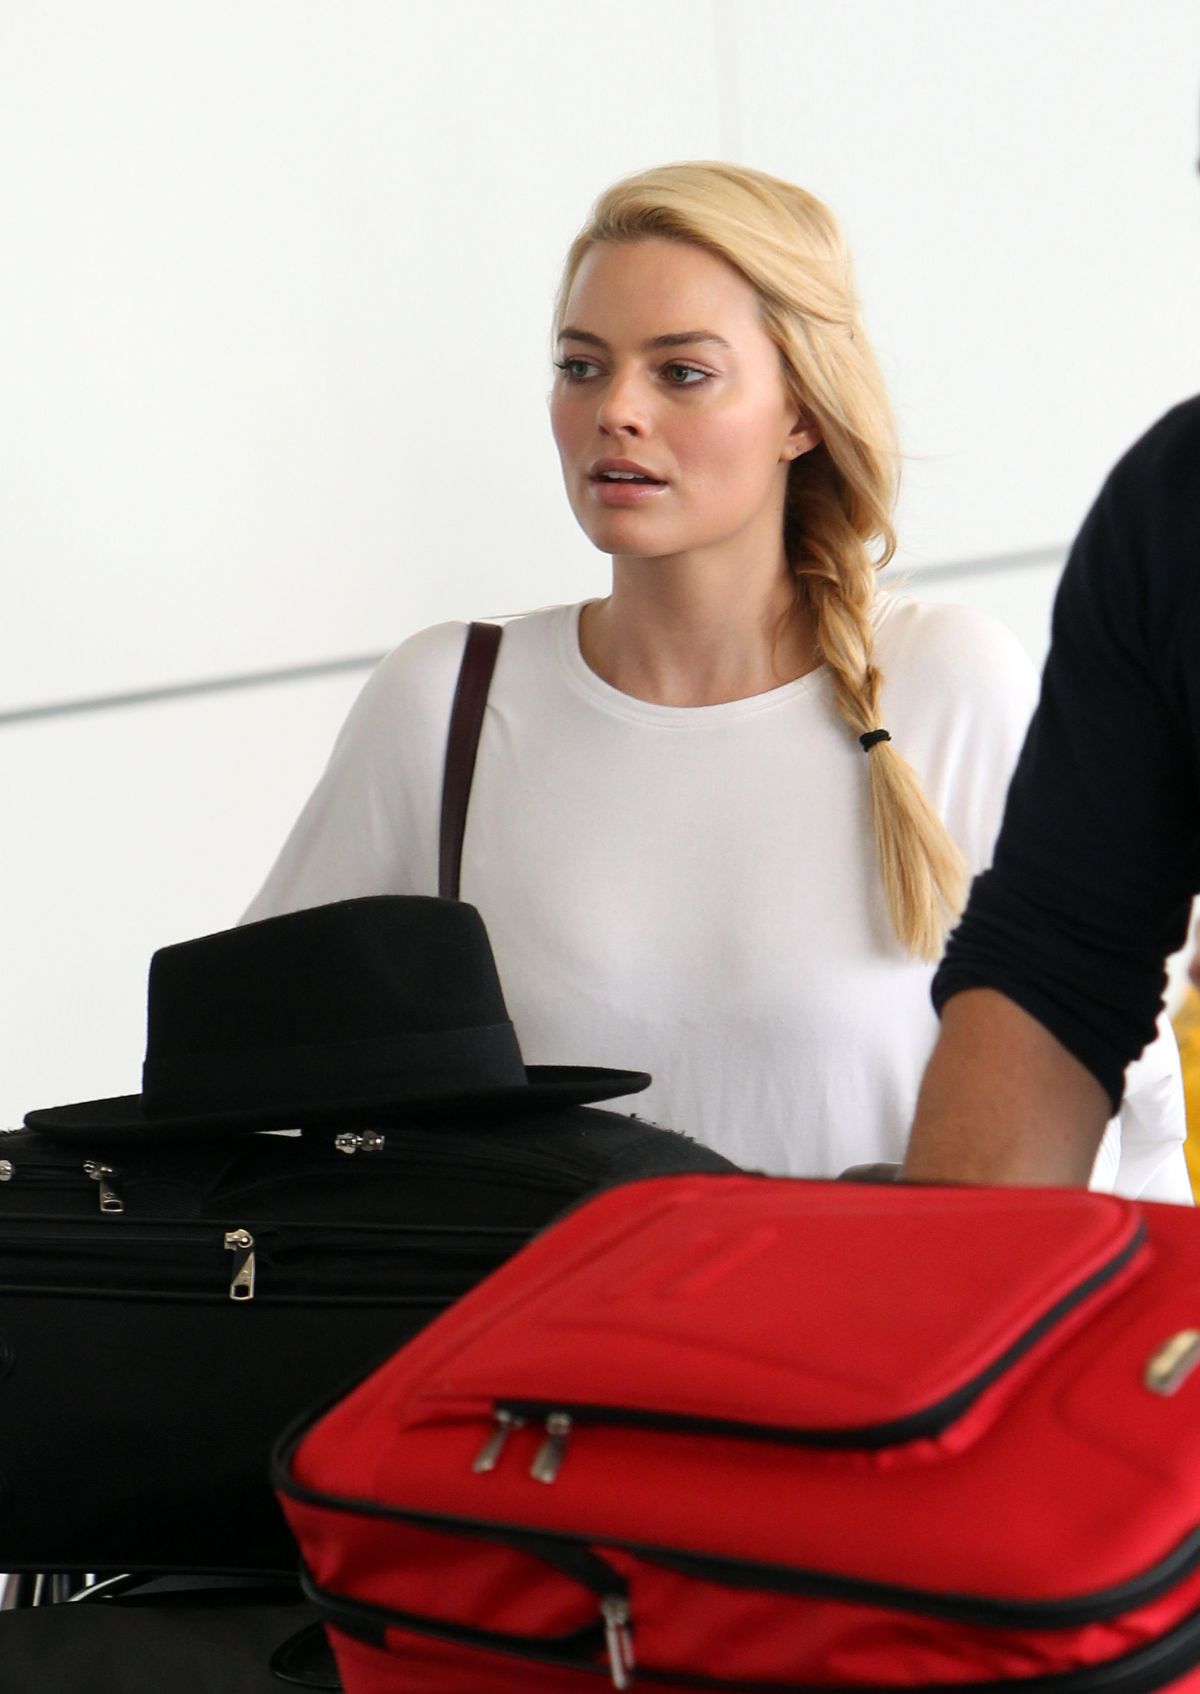 MARGOT ROBBIE Arrives at Airport in Sydney 1212